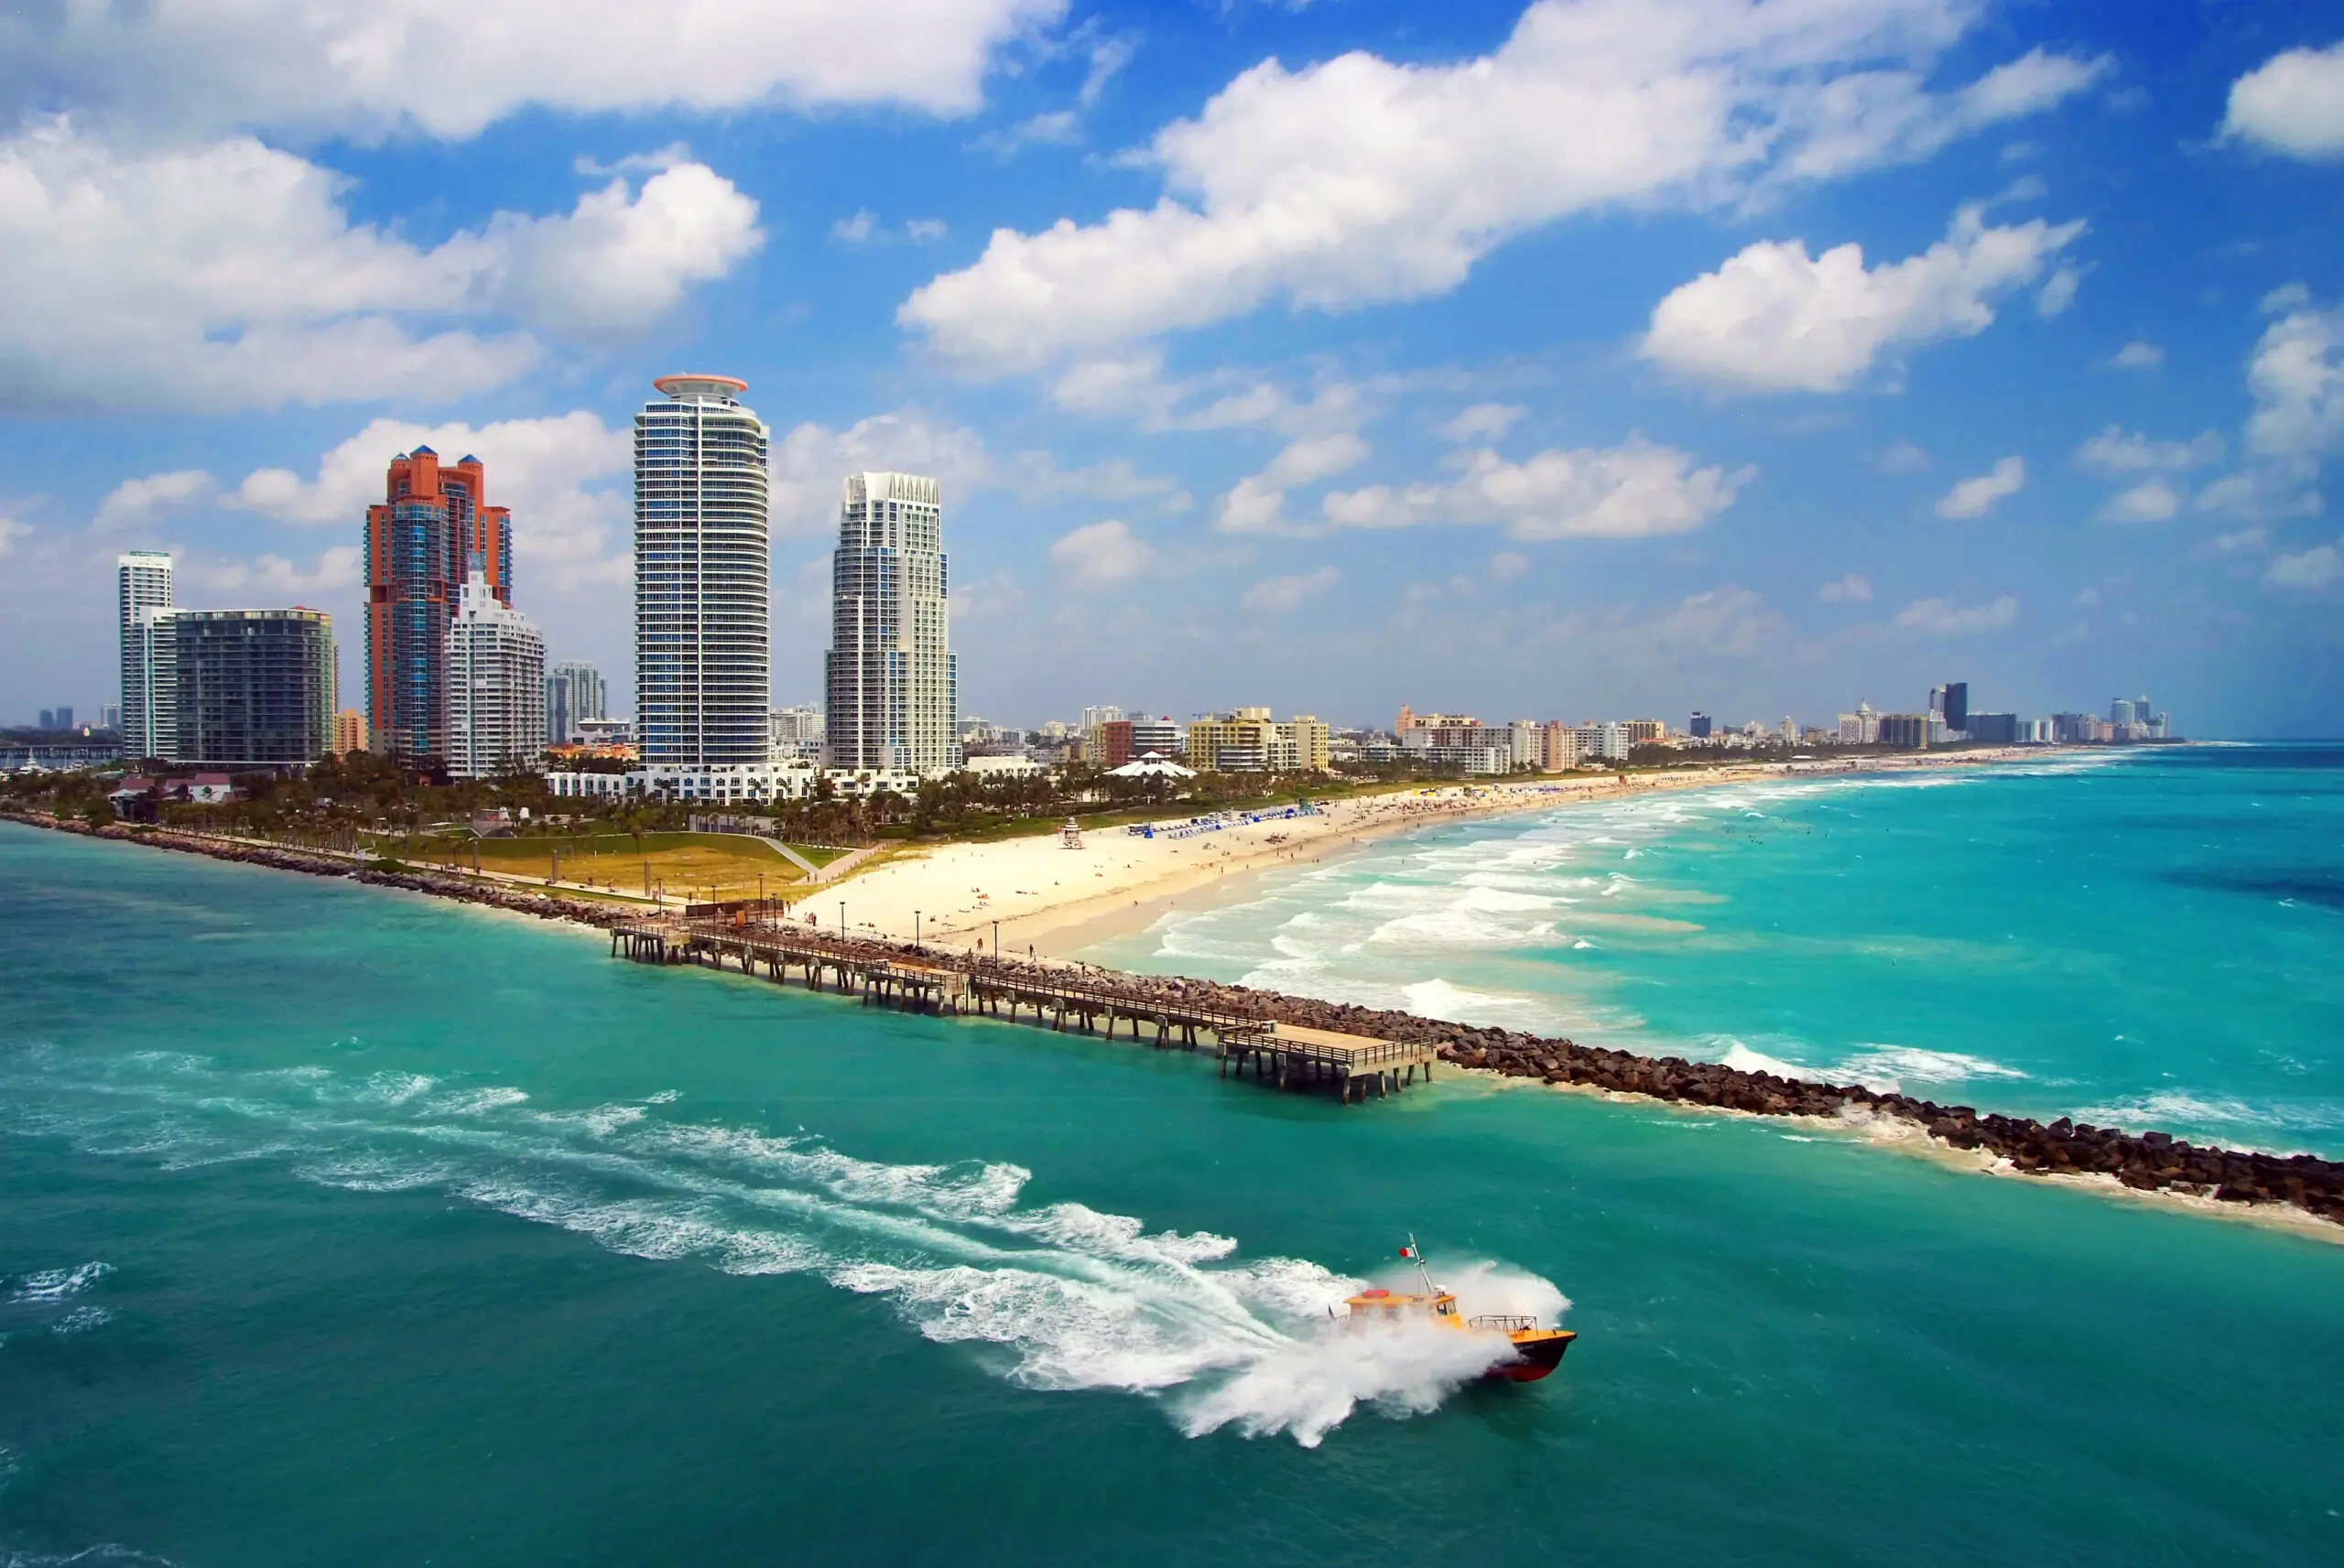 LIV Nightclub: Miami's Premier Nightlife Destination